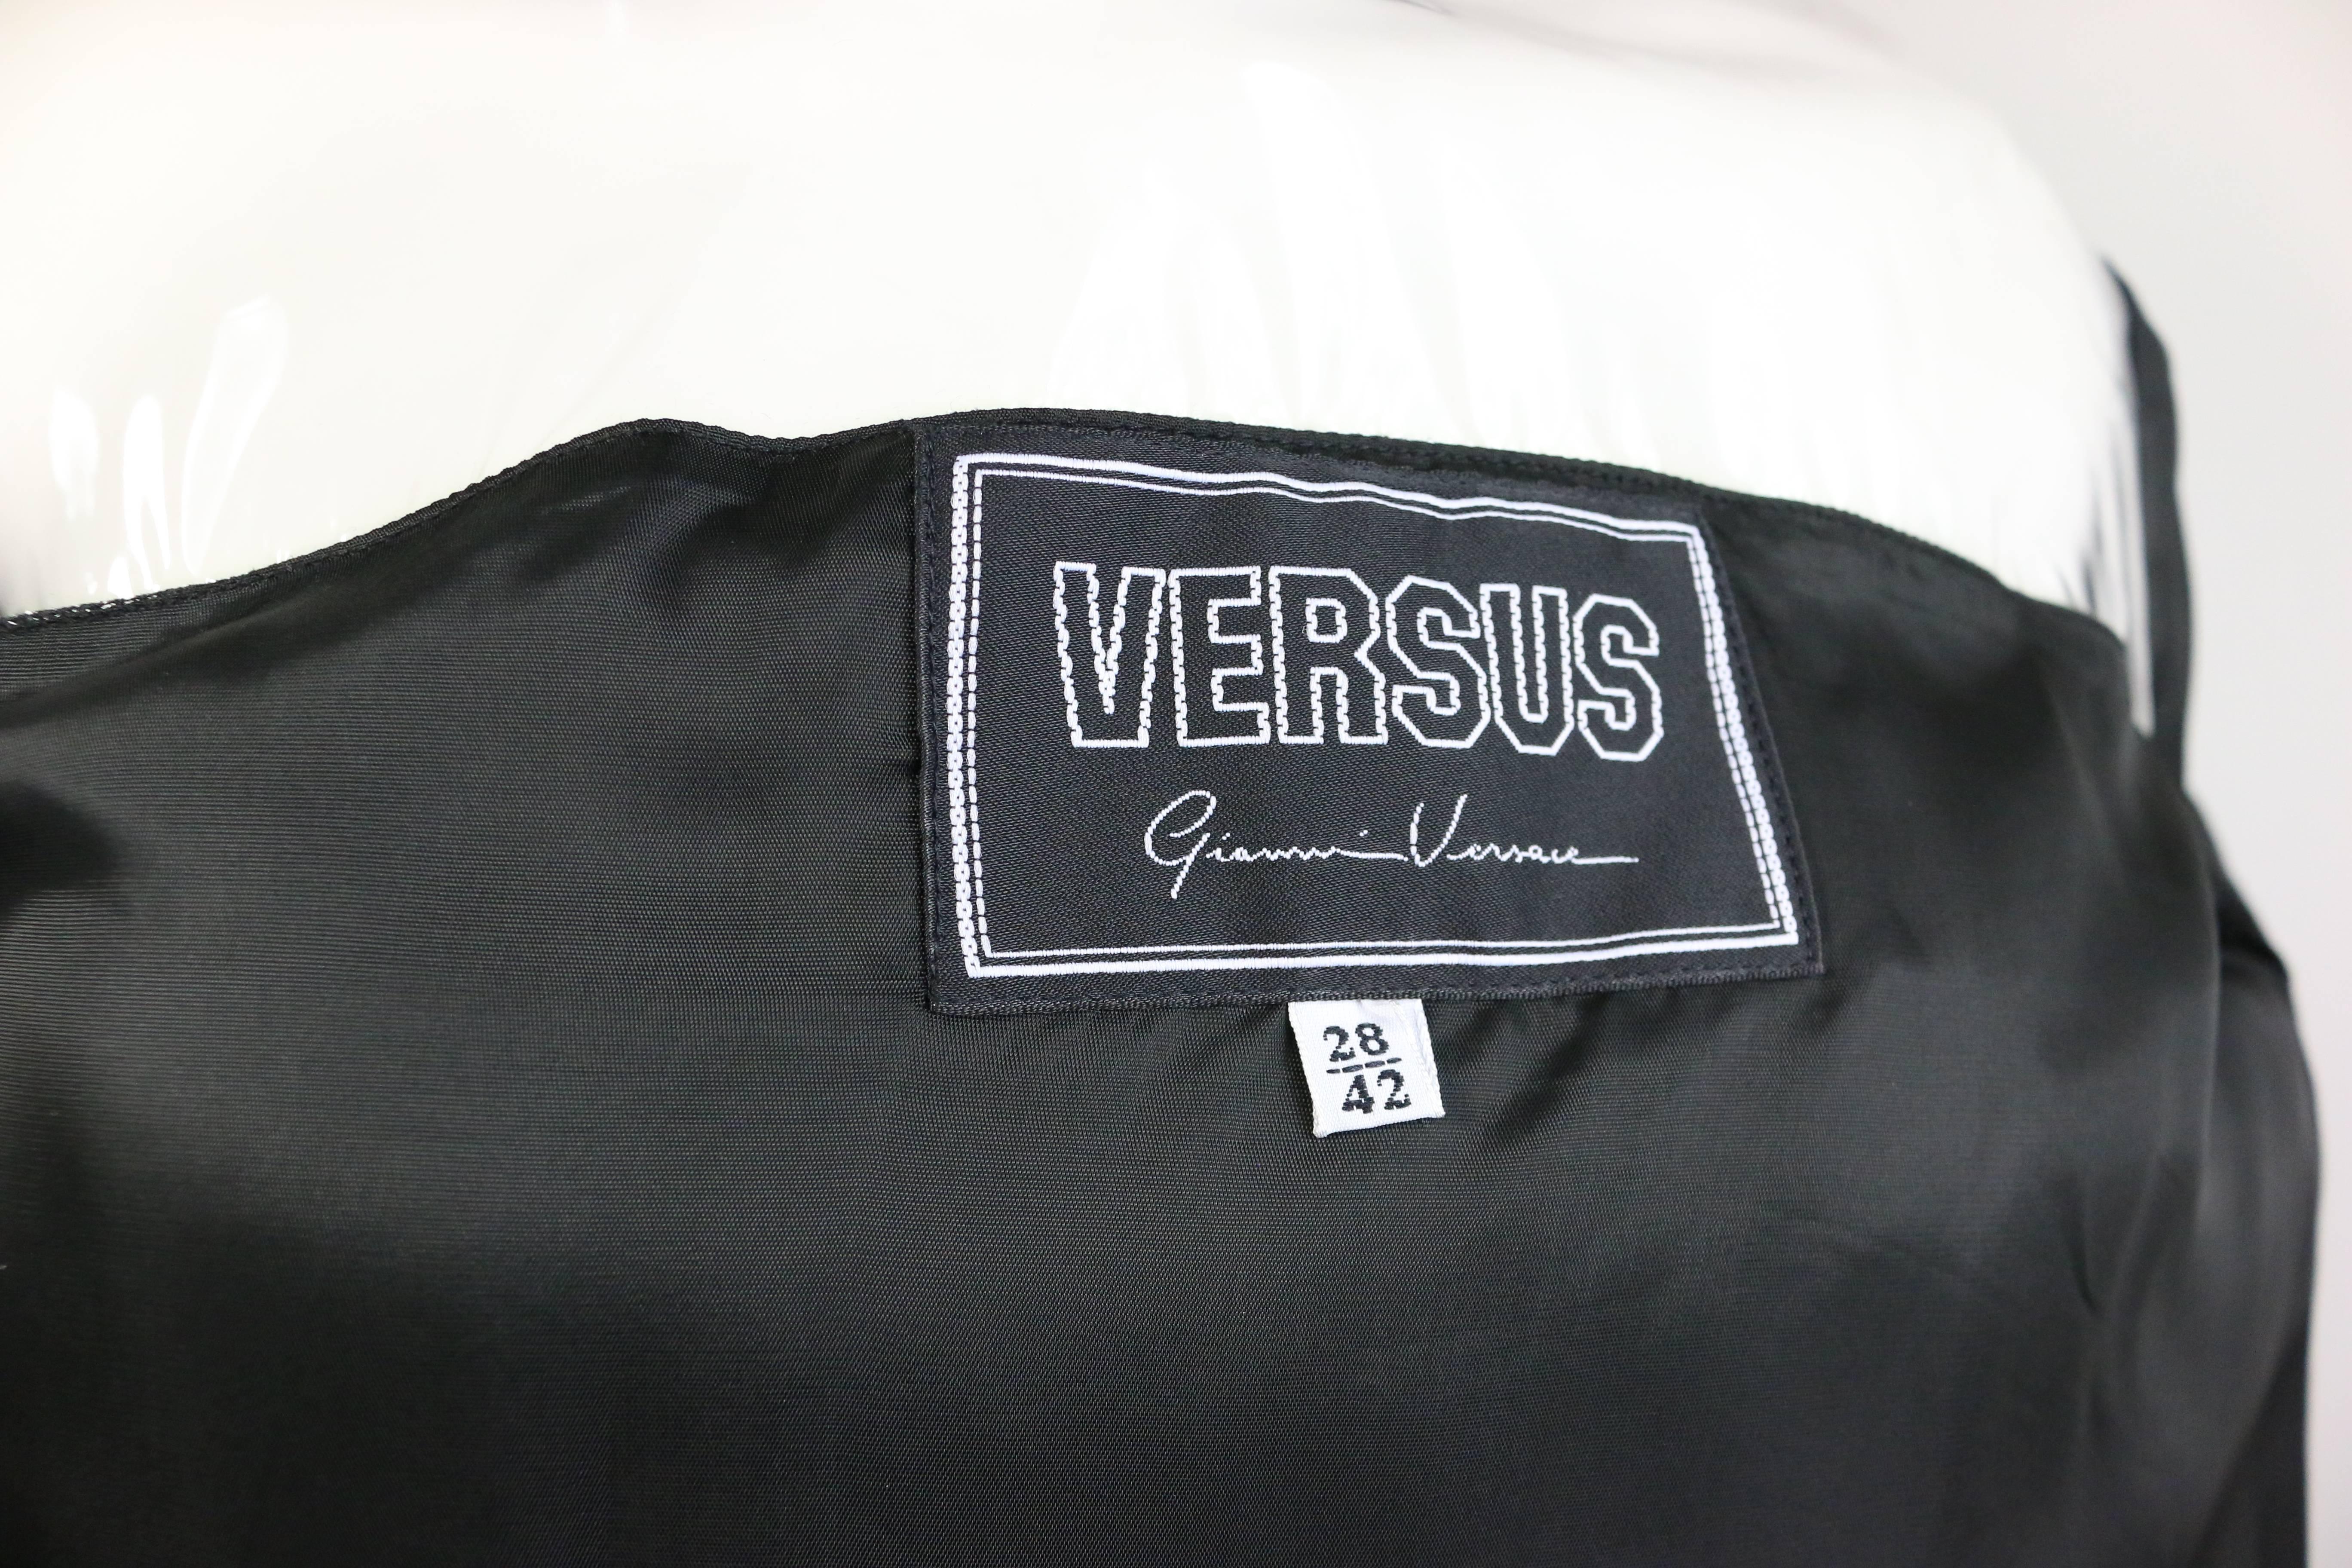 Versus By Gianni Versace Black/Transparent Vinyl Jacket And Skirt Ensemble  For Sale 1